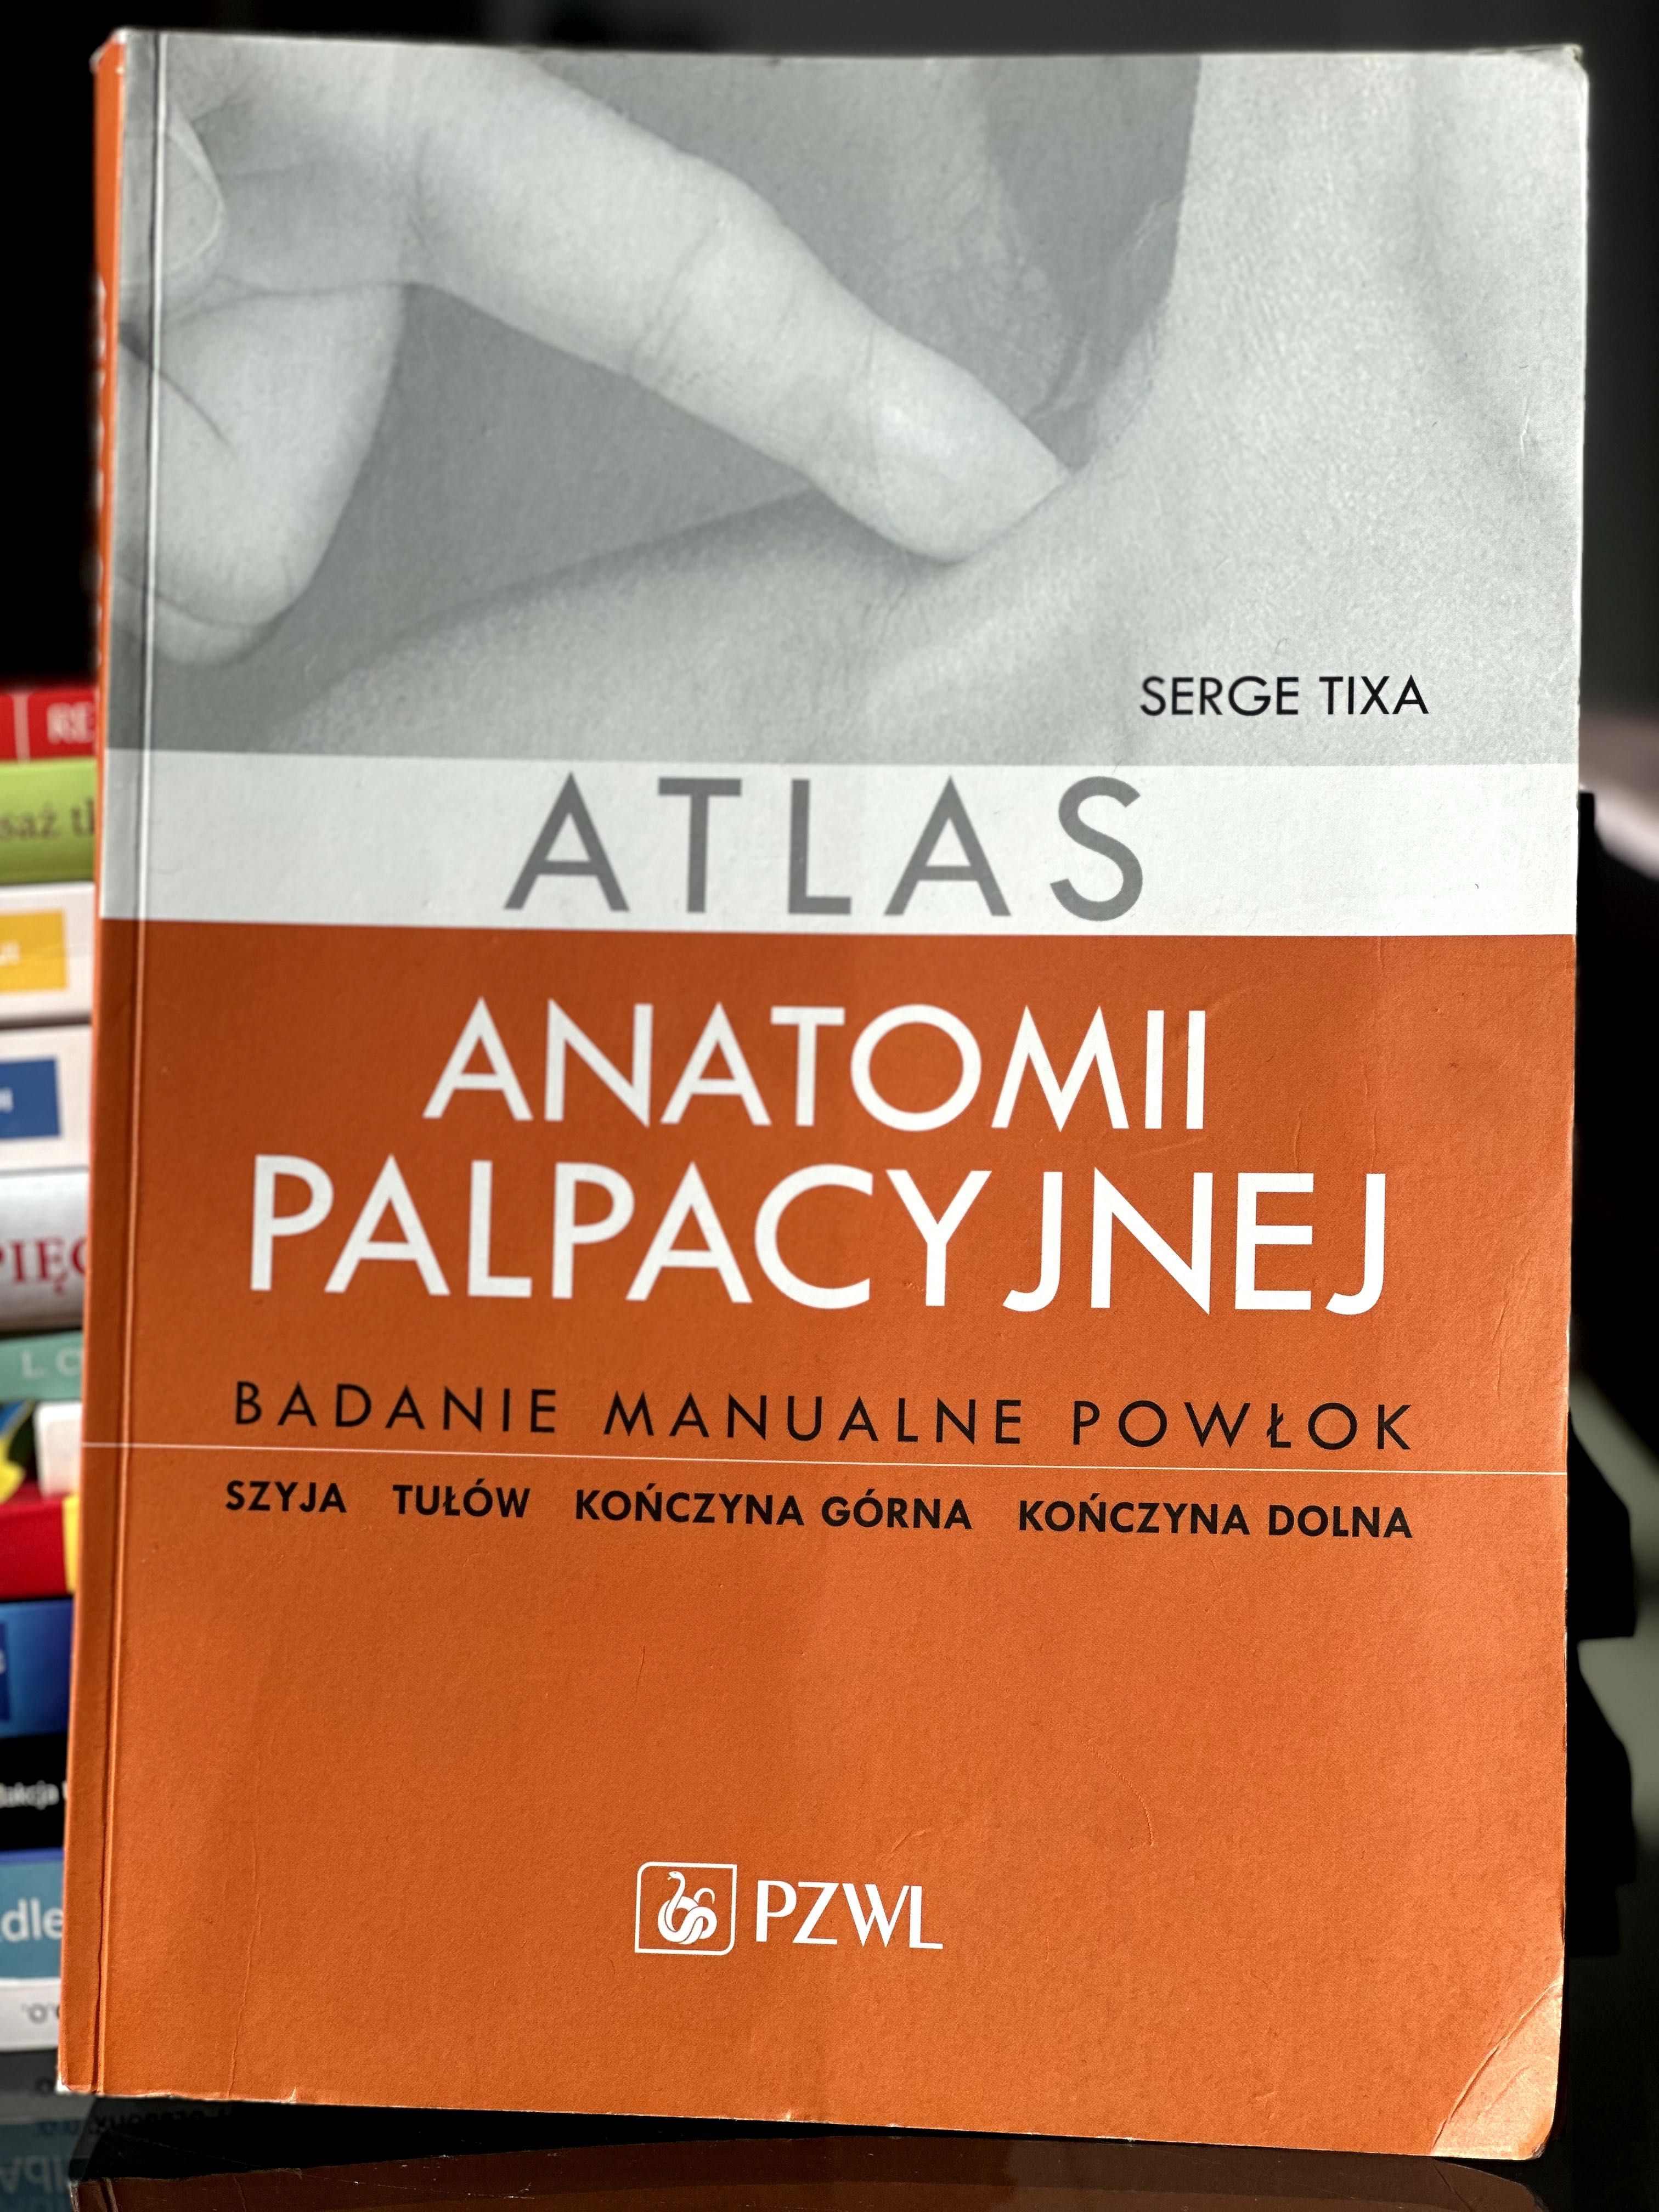 ATLAS Anatomii Palpacyjnej